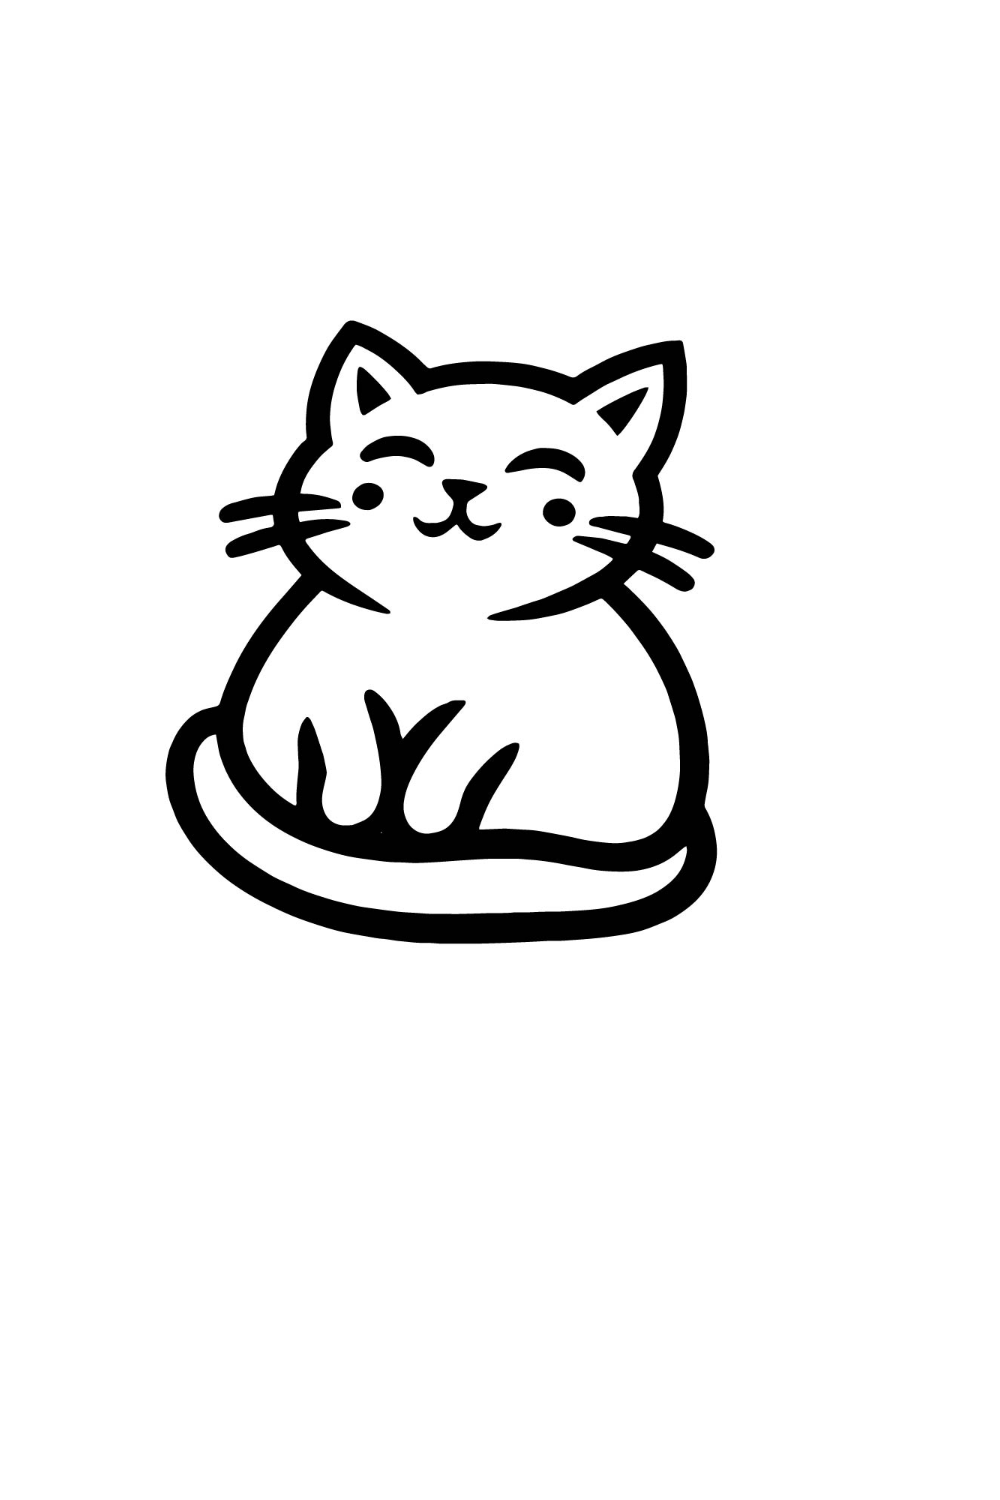 Cats Logo Designs pinterest preview image.